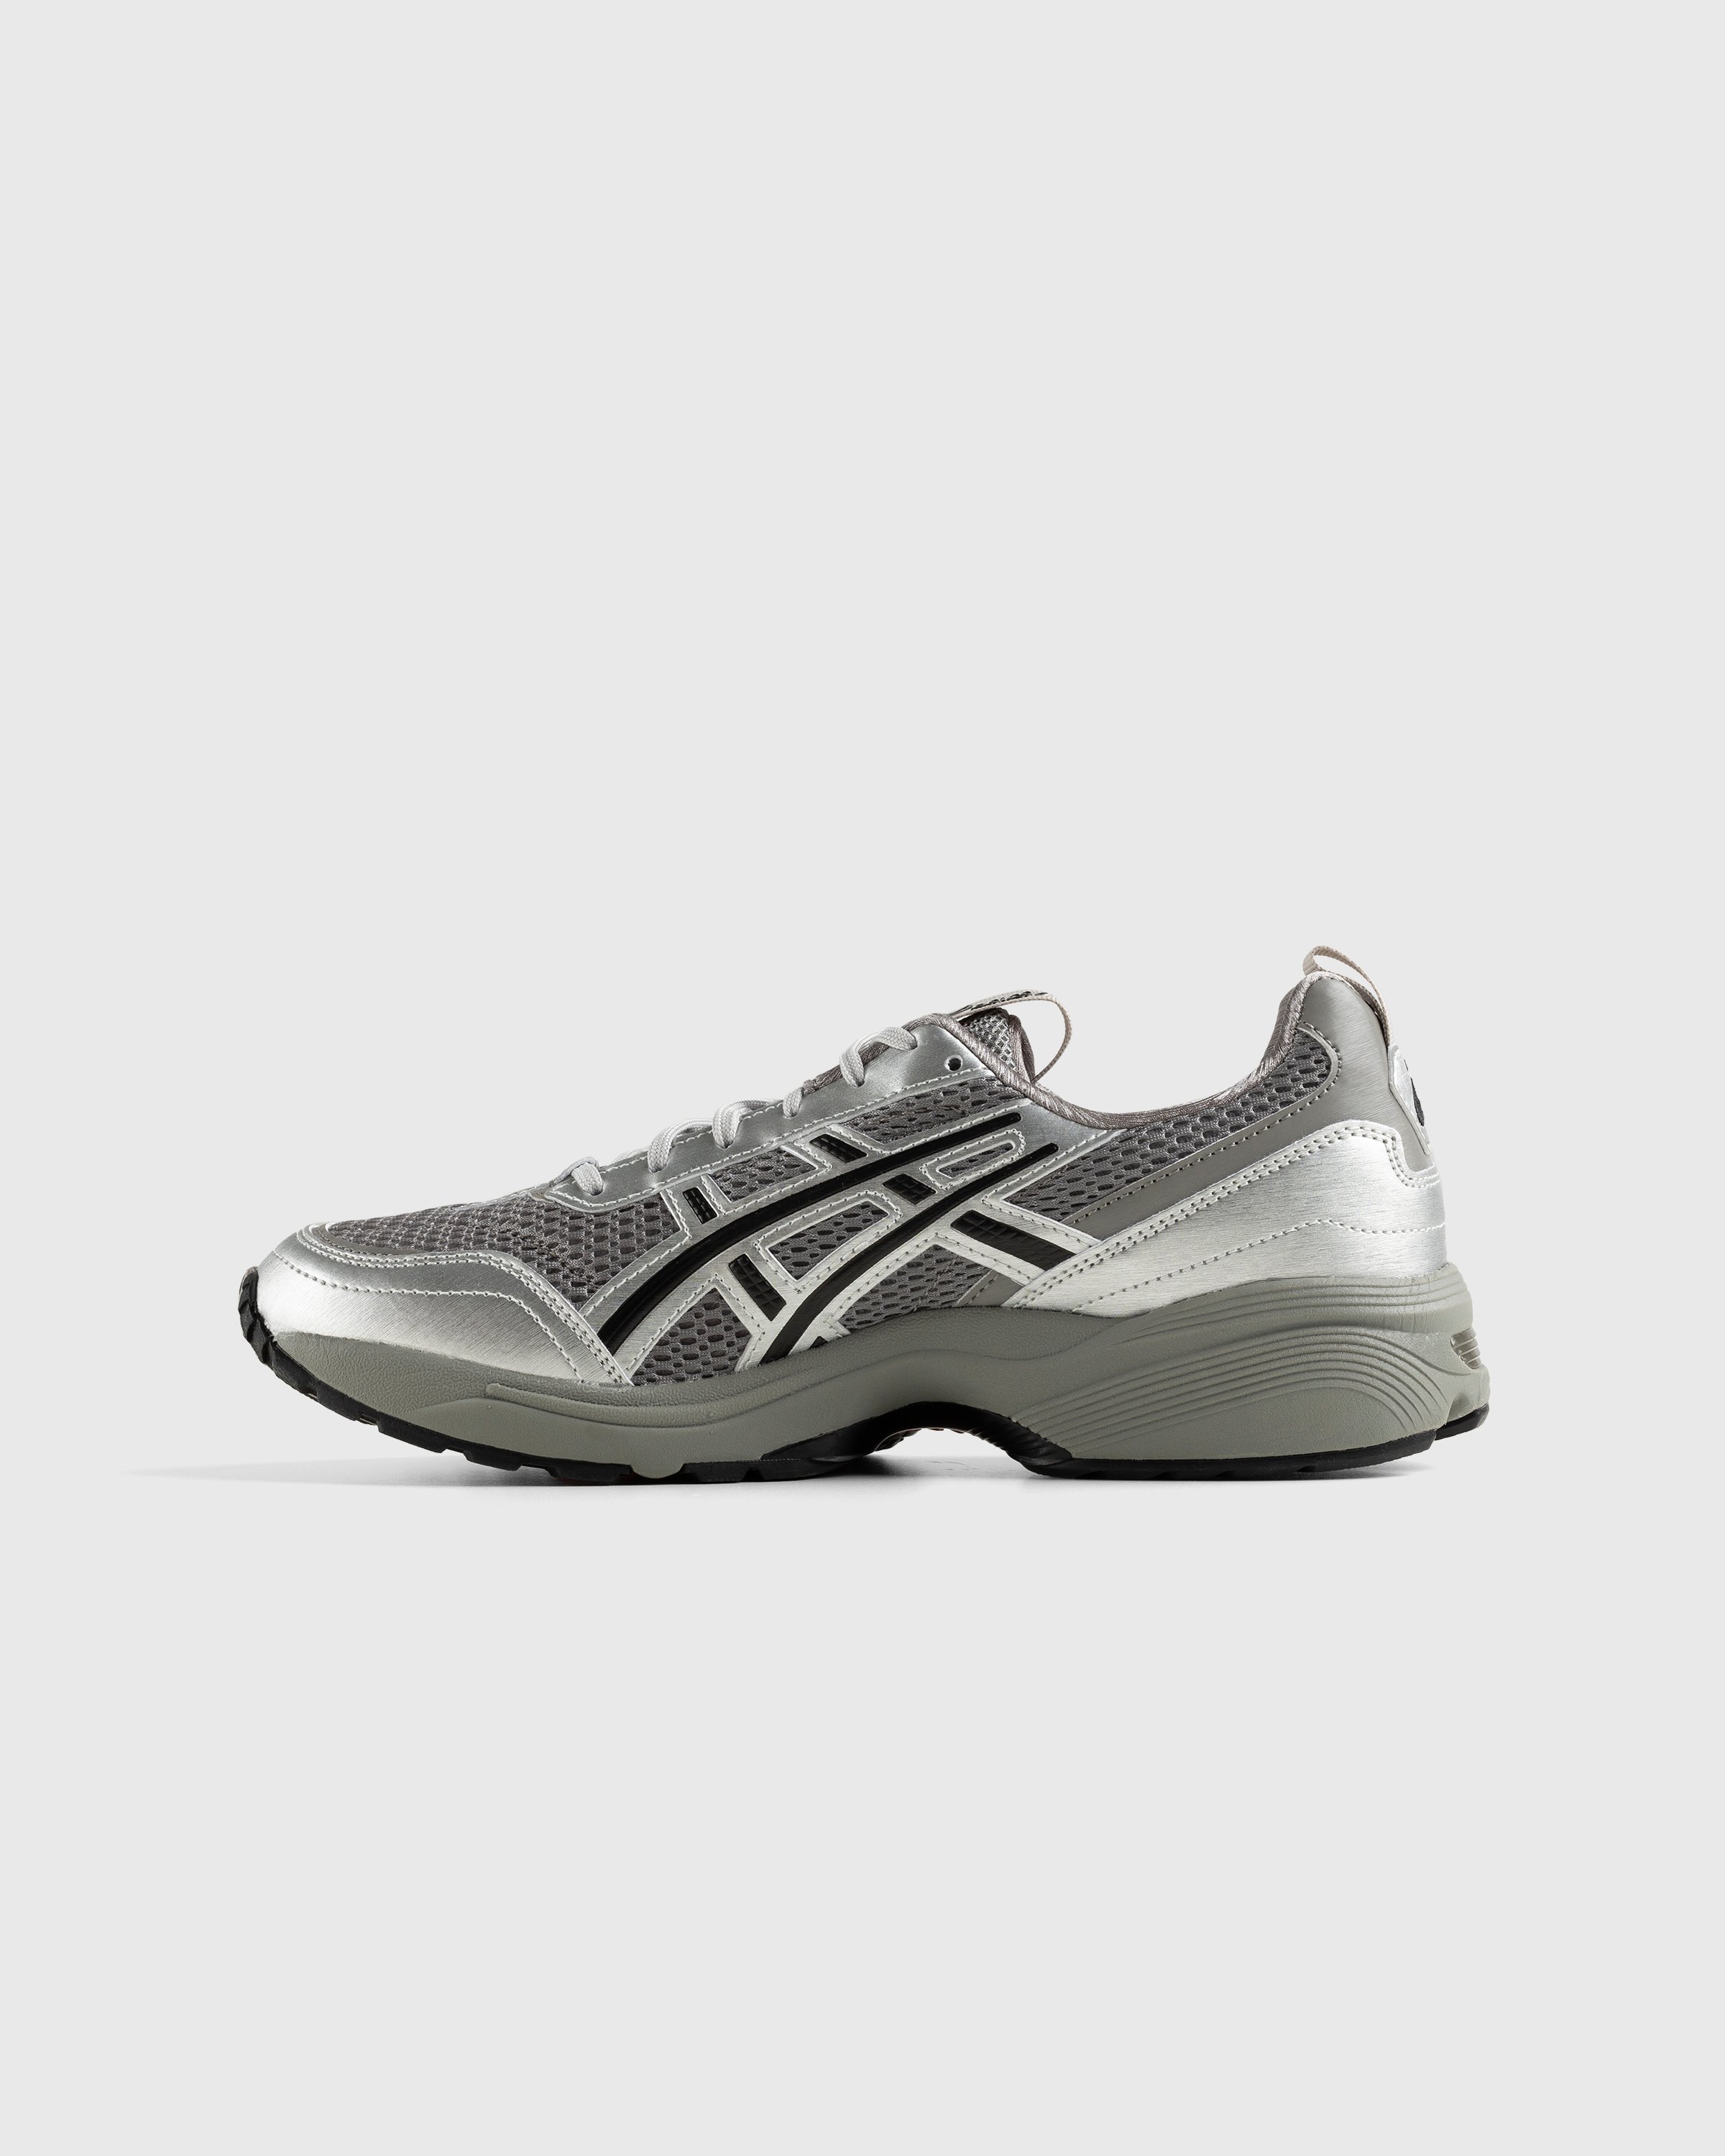 asics - GEL-1090v2 Freja Wewer Edition Silver - Footwear - Silver - Image 2